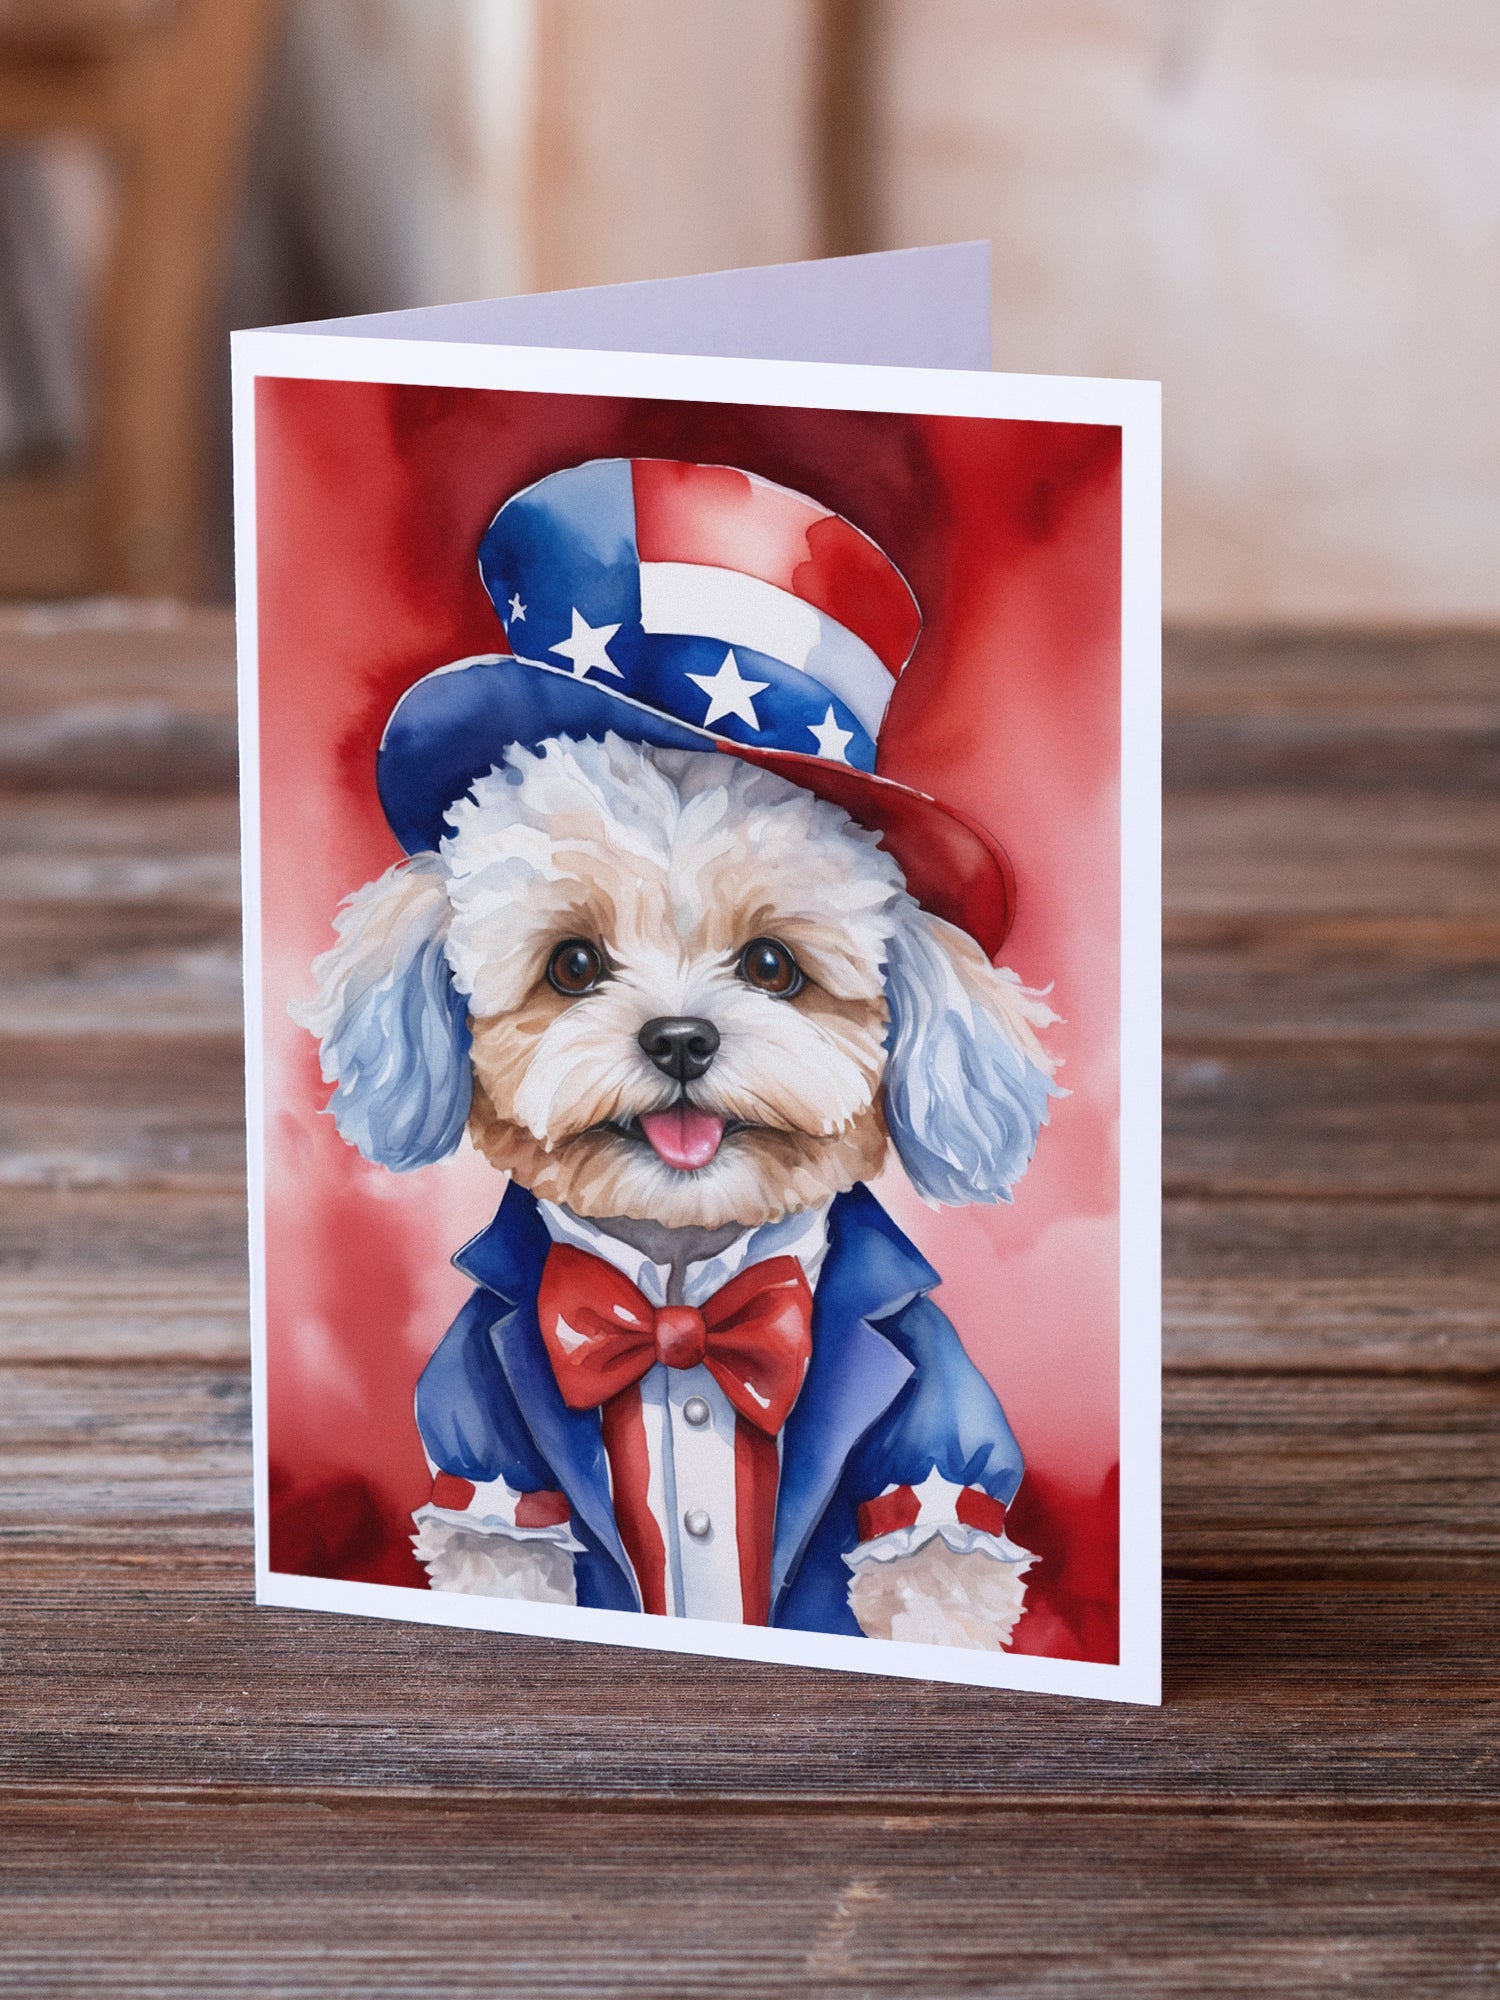 Buy this Maltipoo Patriotic American Greeting Cards Pack of 8